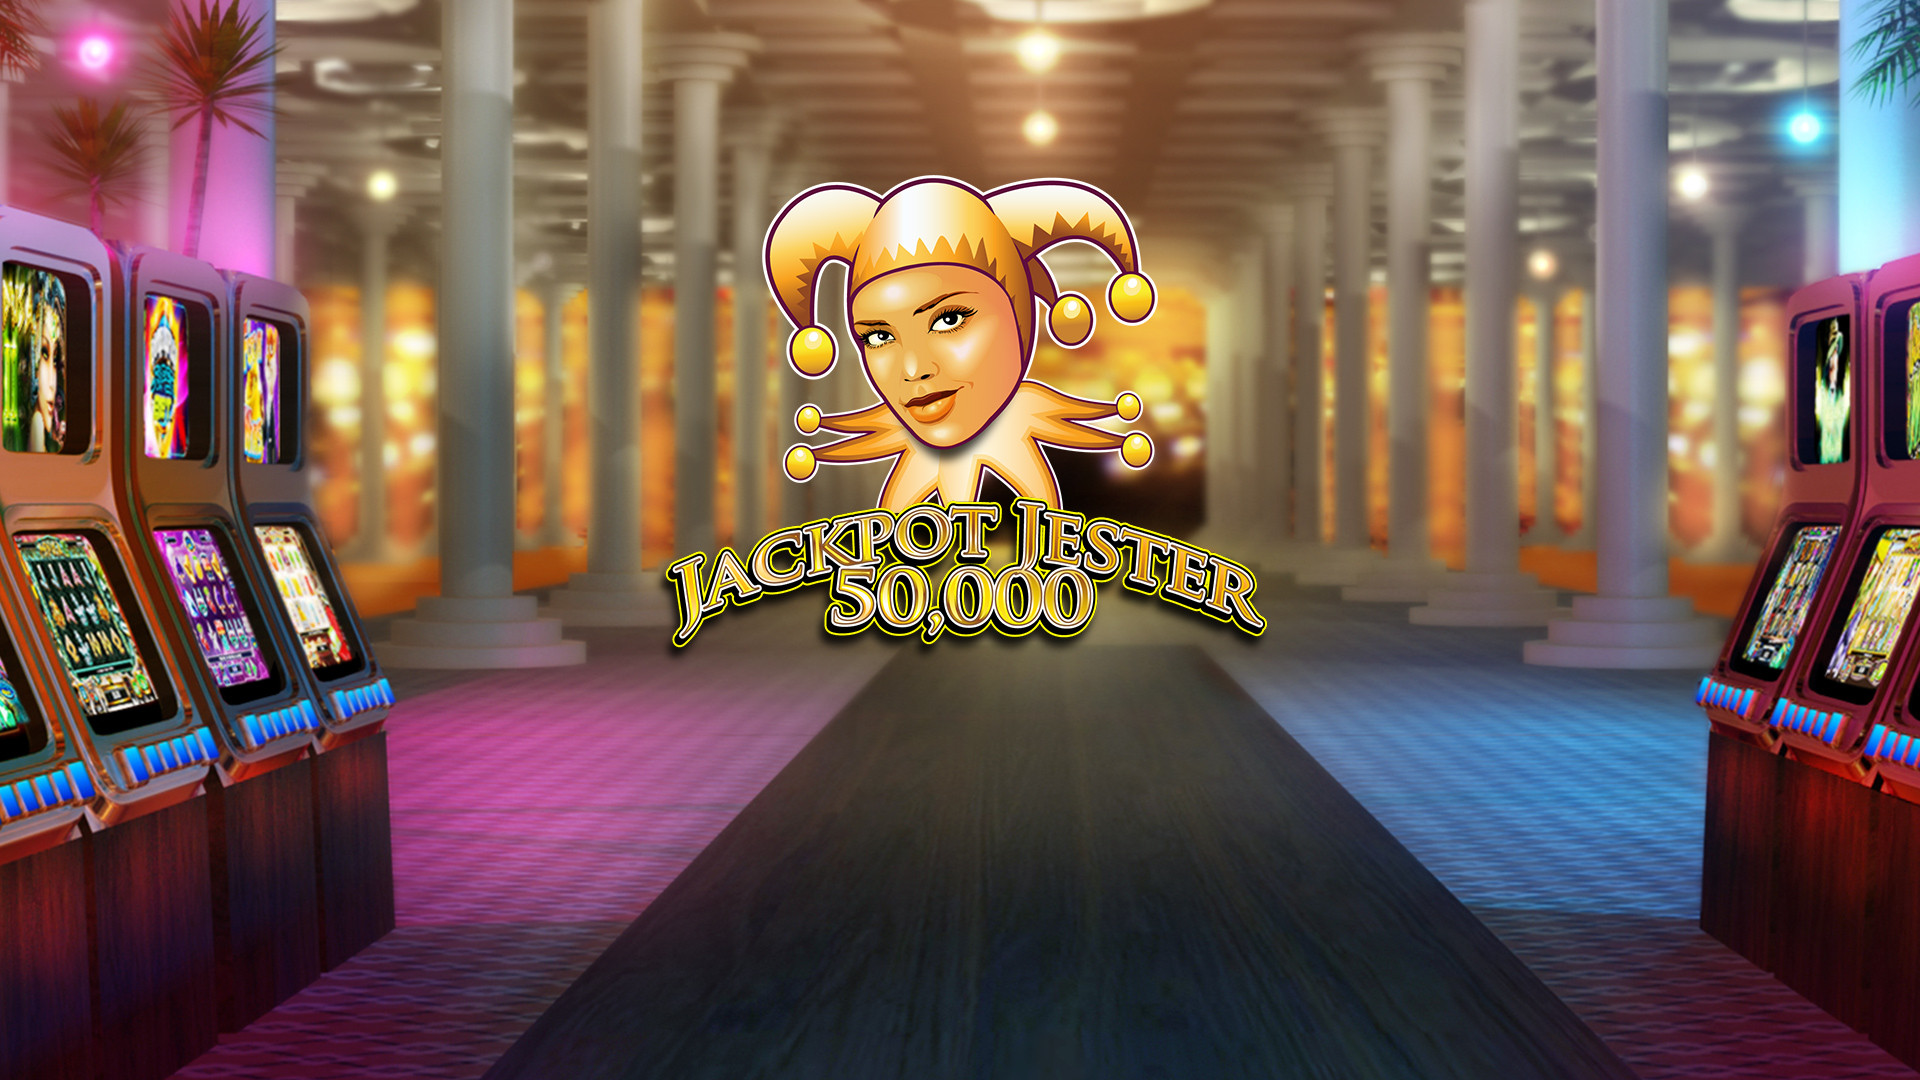 Jackpot Jester 50.000 HQ